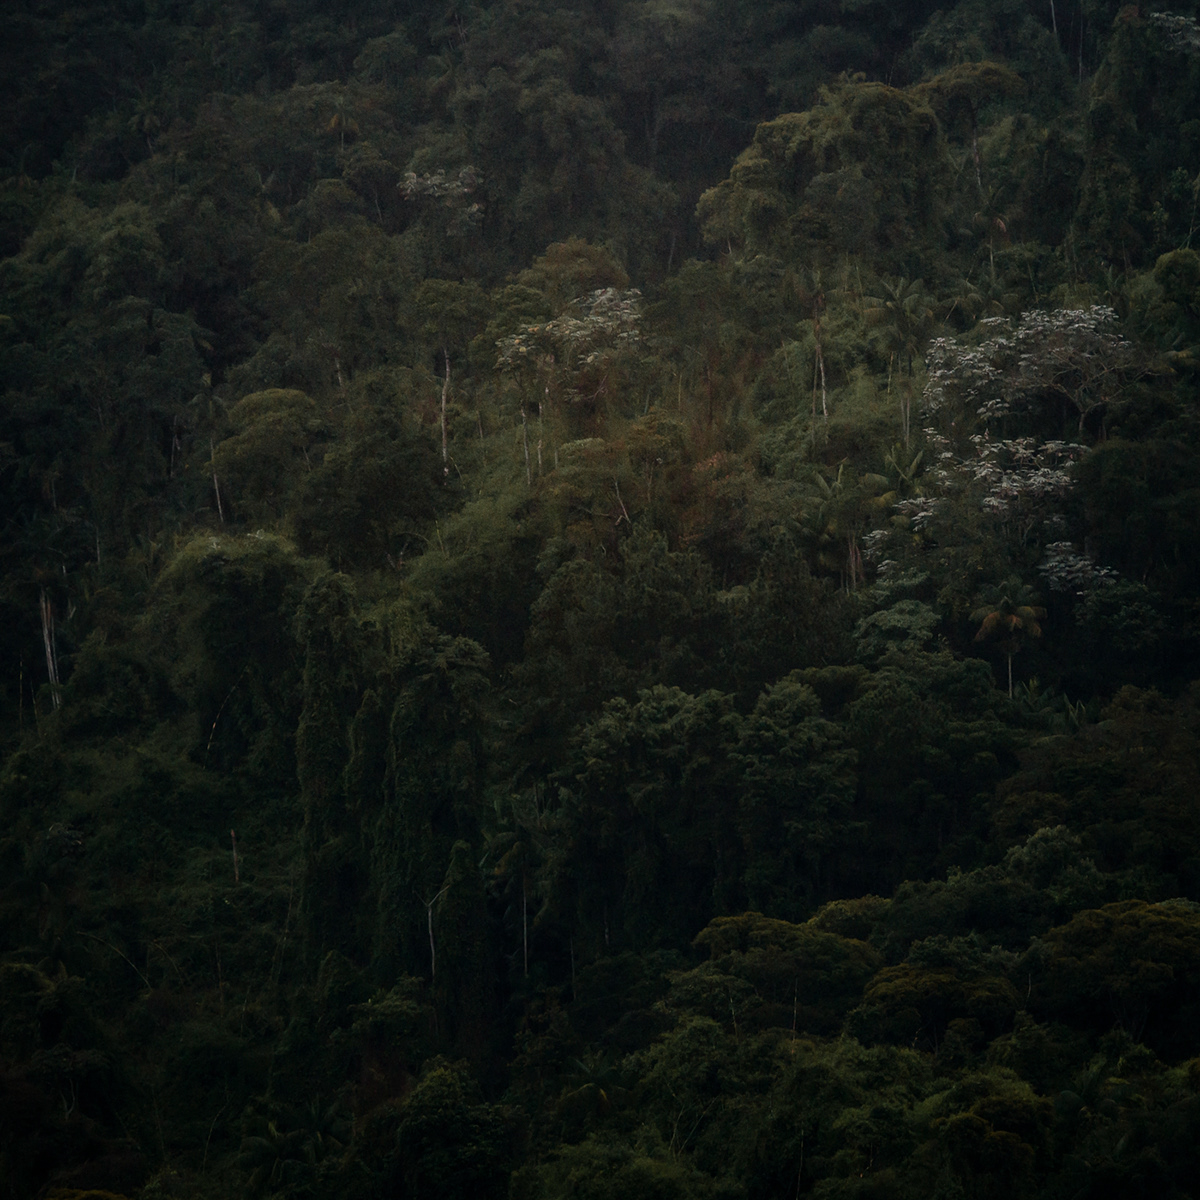 rain forest mantiqueira landscapes mata atlantica Photography  Nature fineartphotography fineartprints Brazil